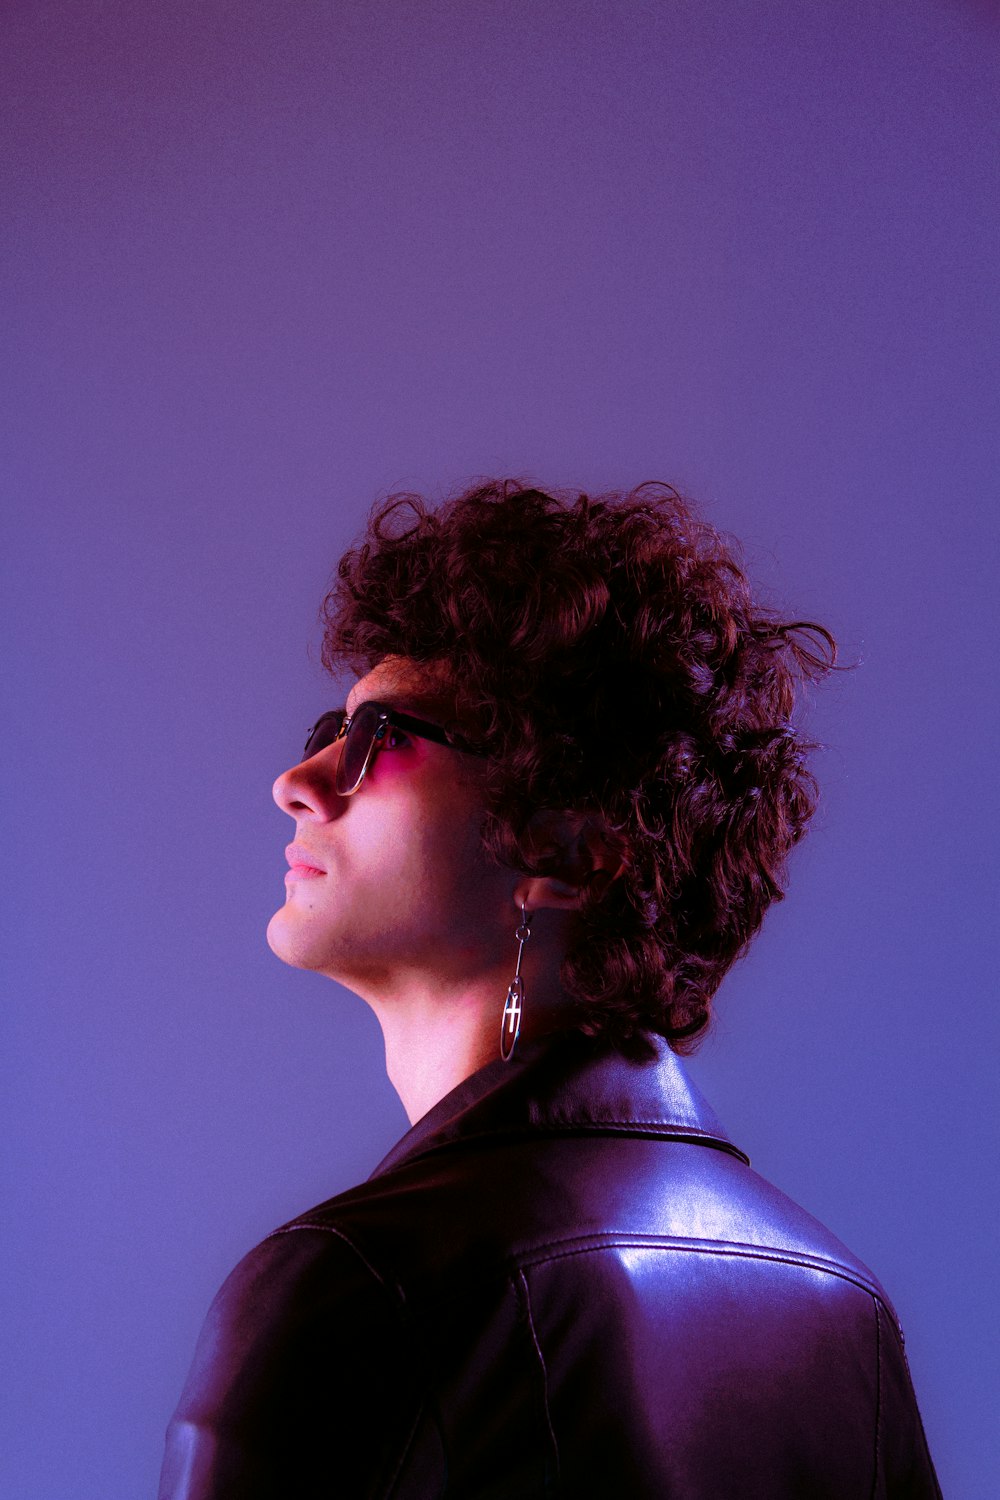 woman in black shirt wearing sunglasses